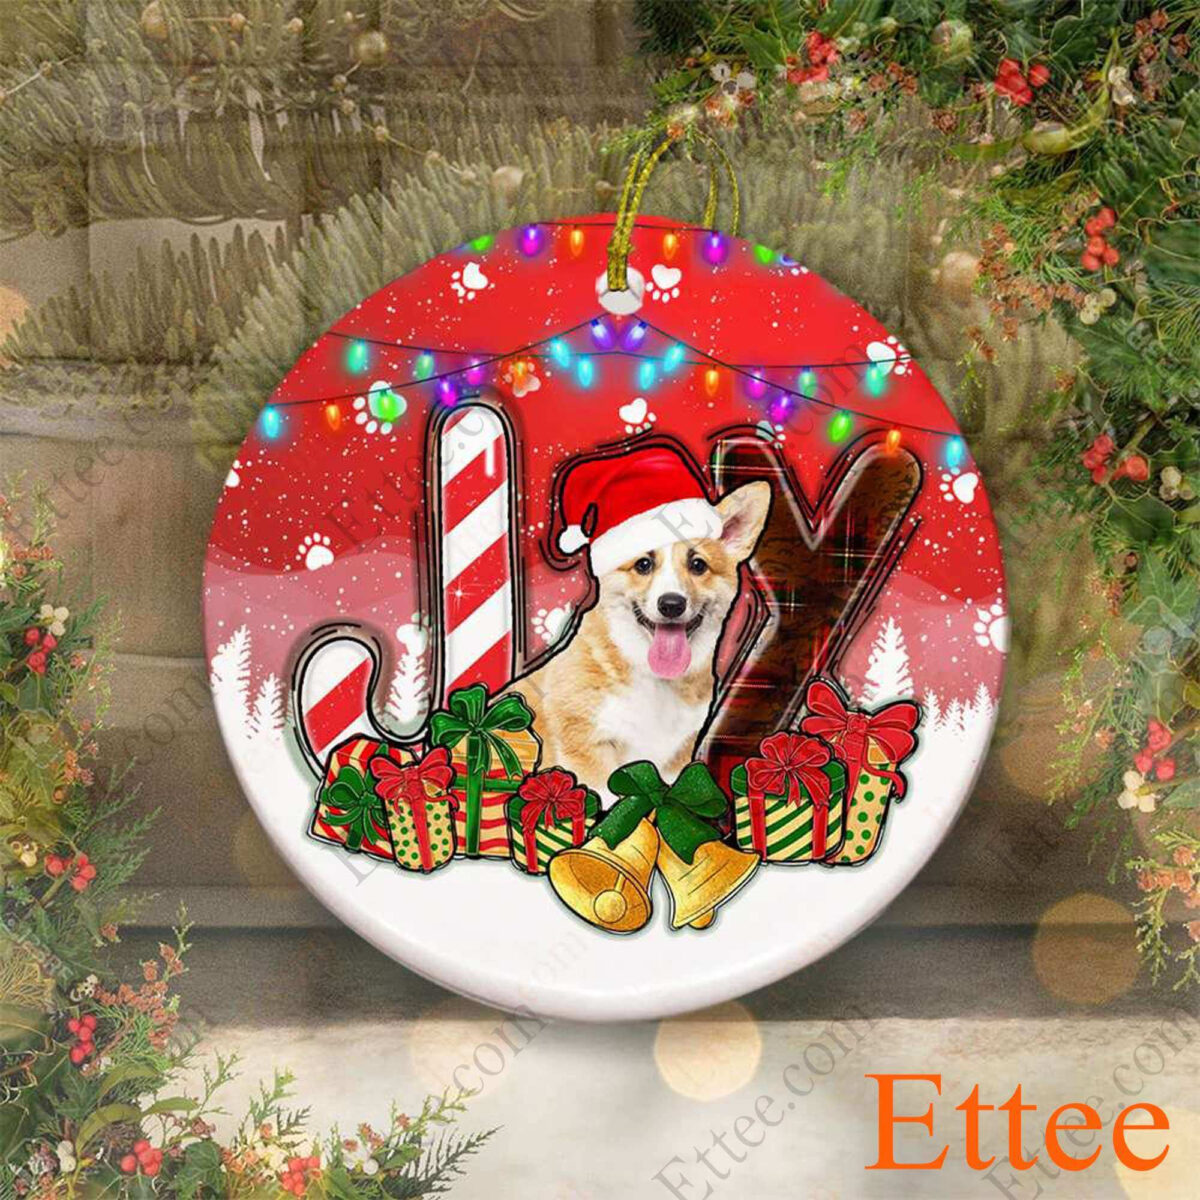 Corgi Dog Ceramic Ornament, JOY Christmas Gift for Dog Lover - Ettee - Ceramic ornament